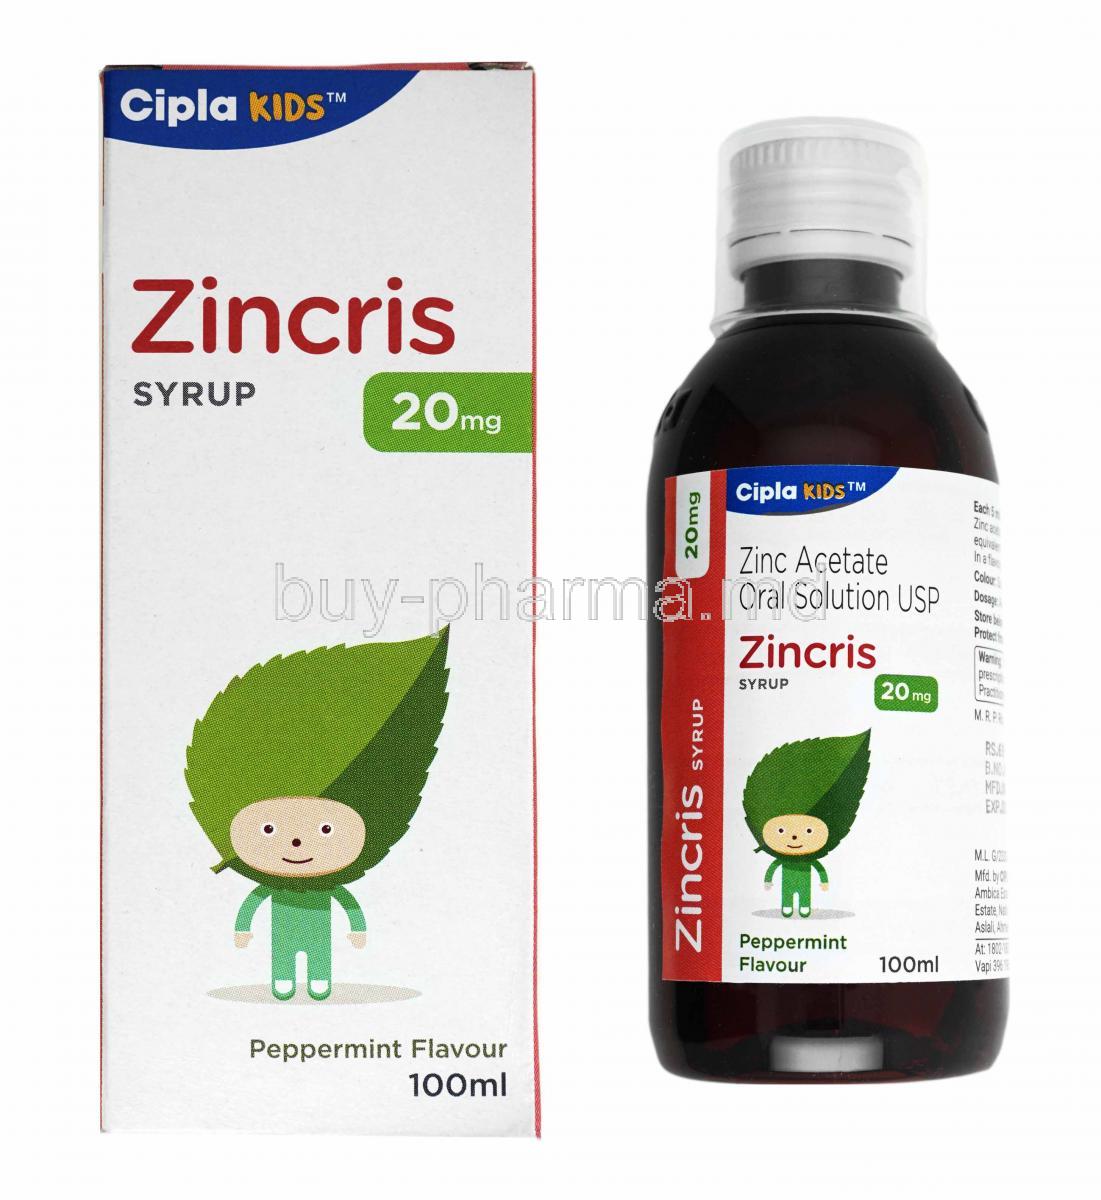 Zincris Syrup, Zinc Acetate box and bottle